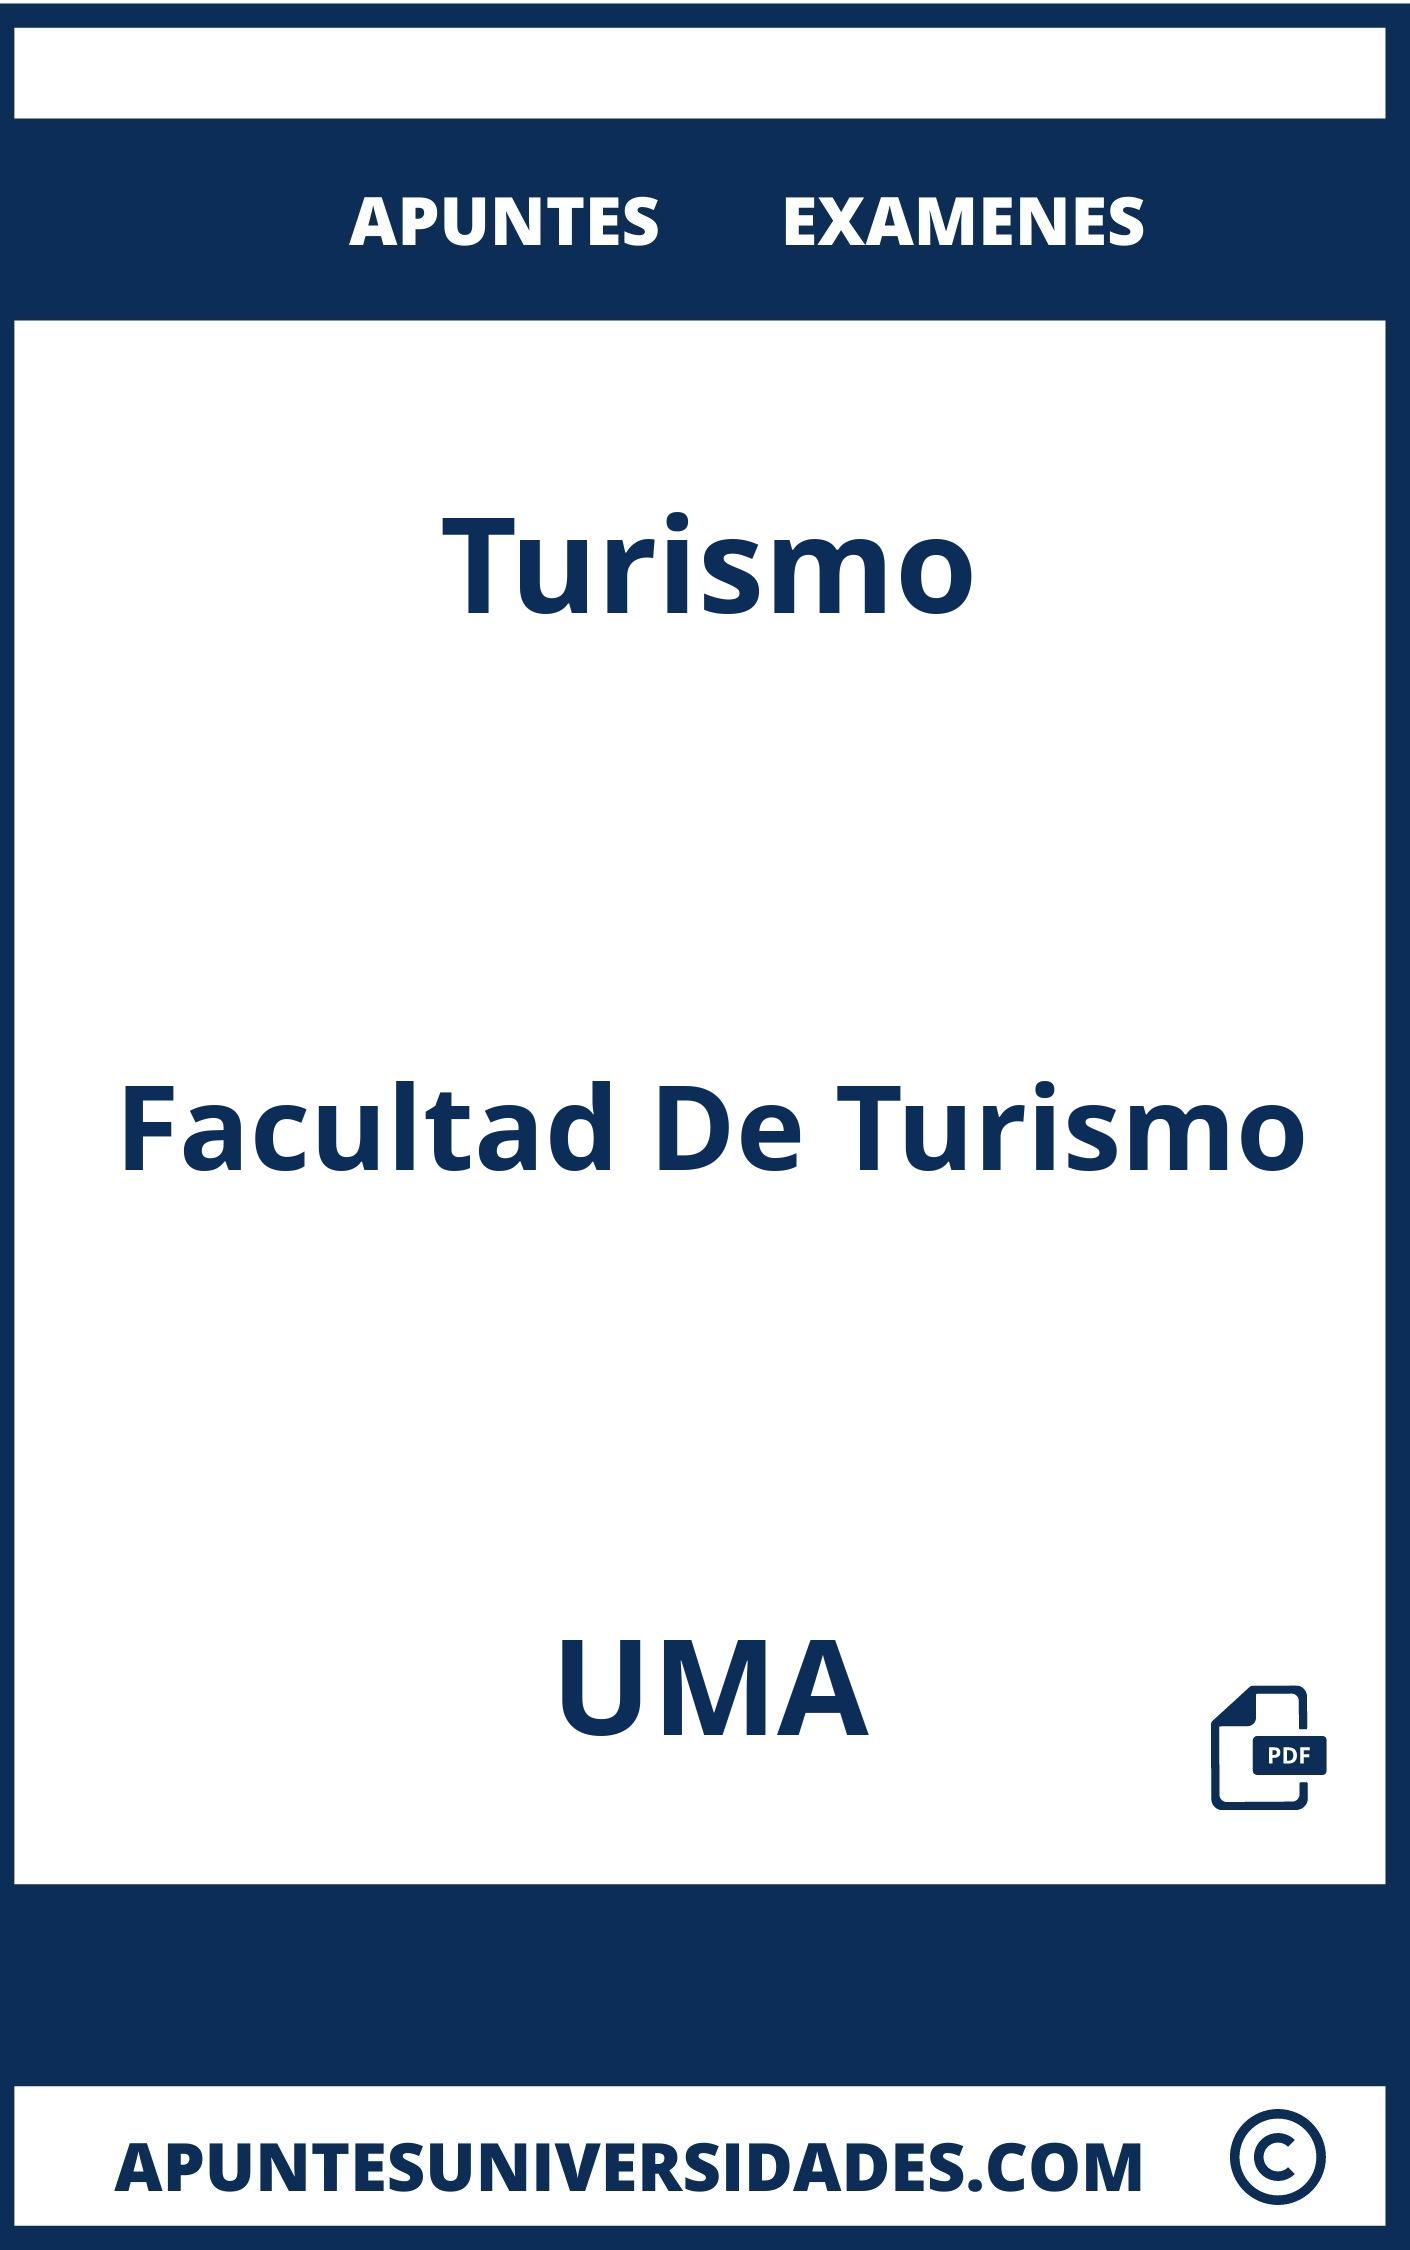 Apuntes Turismo UMA y Examenes